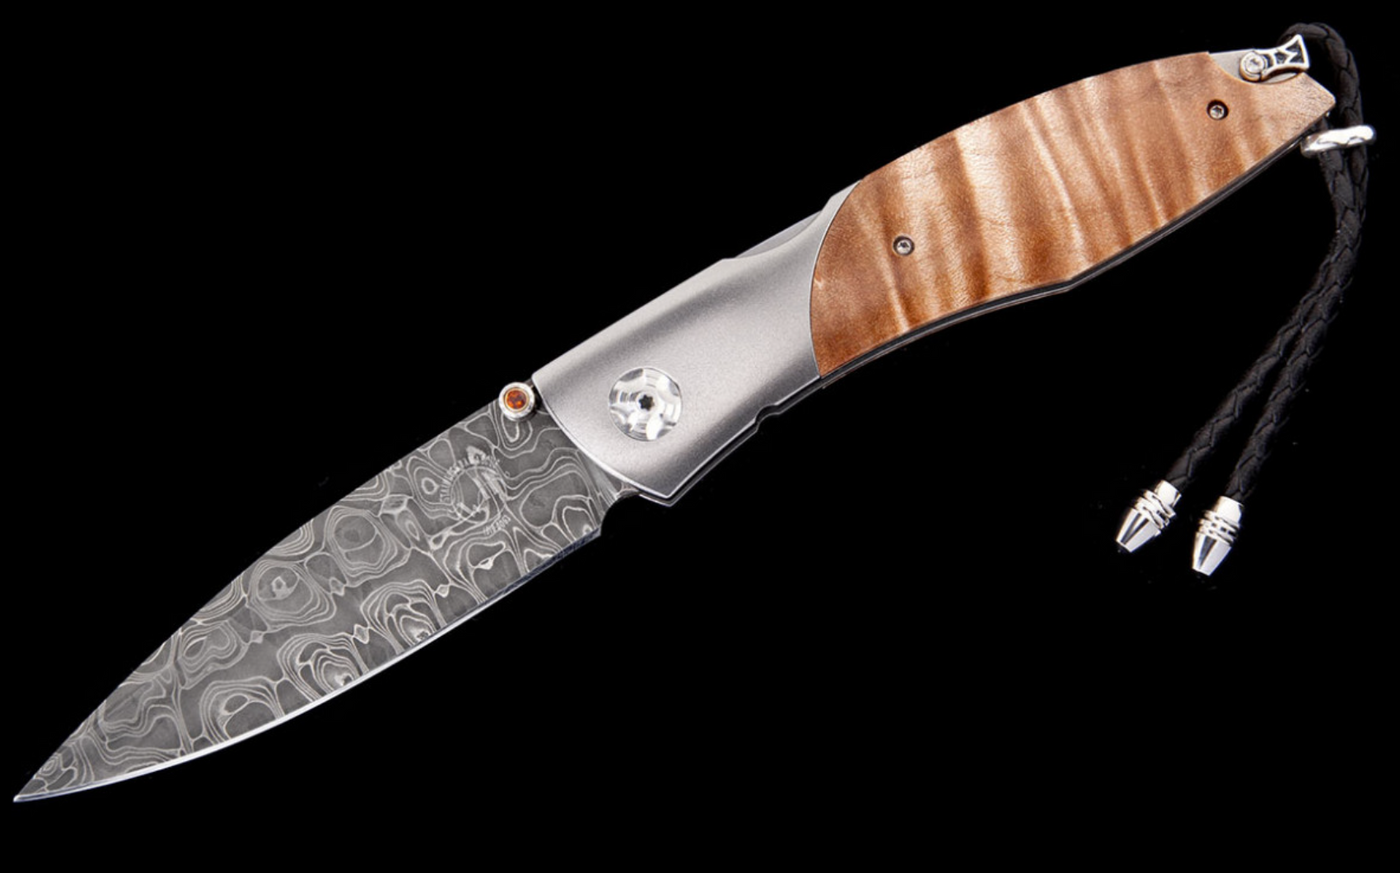 William Henry Omni 'Maple' Pocket Knife